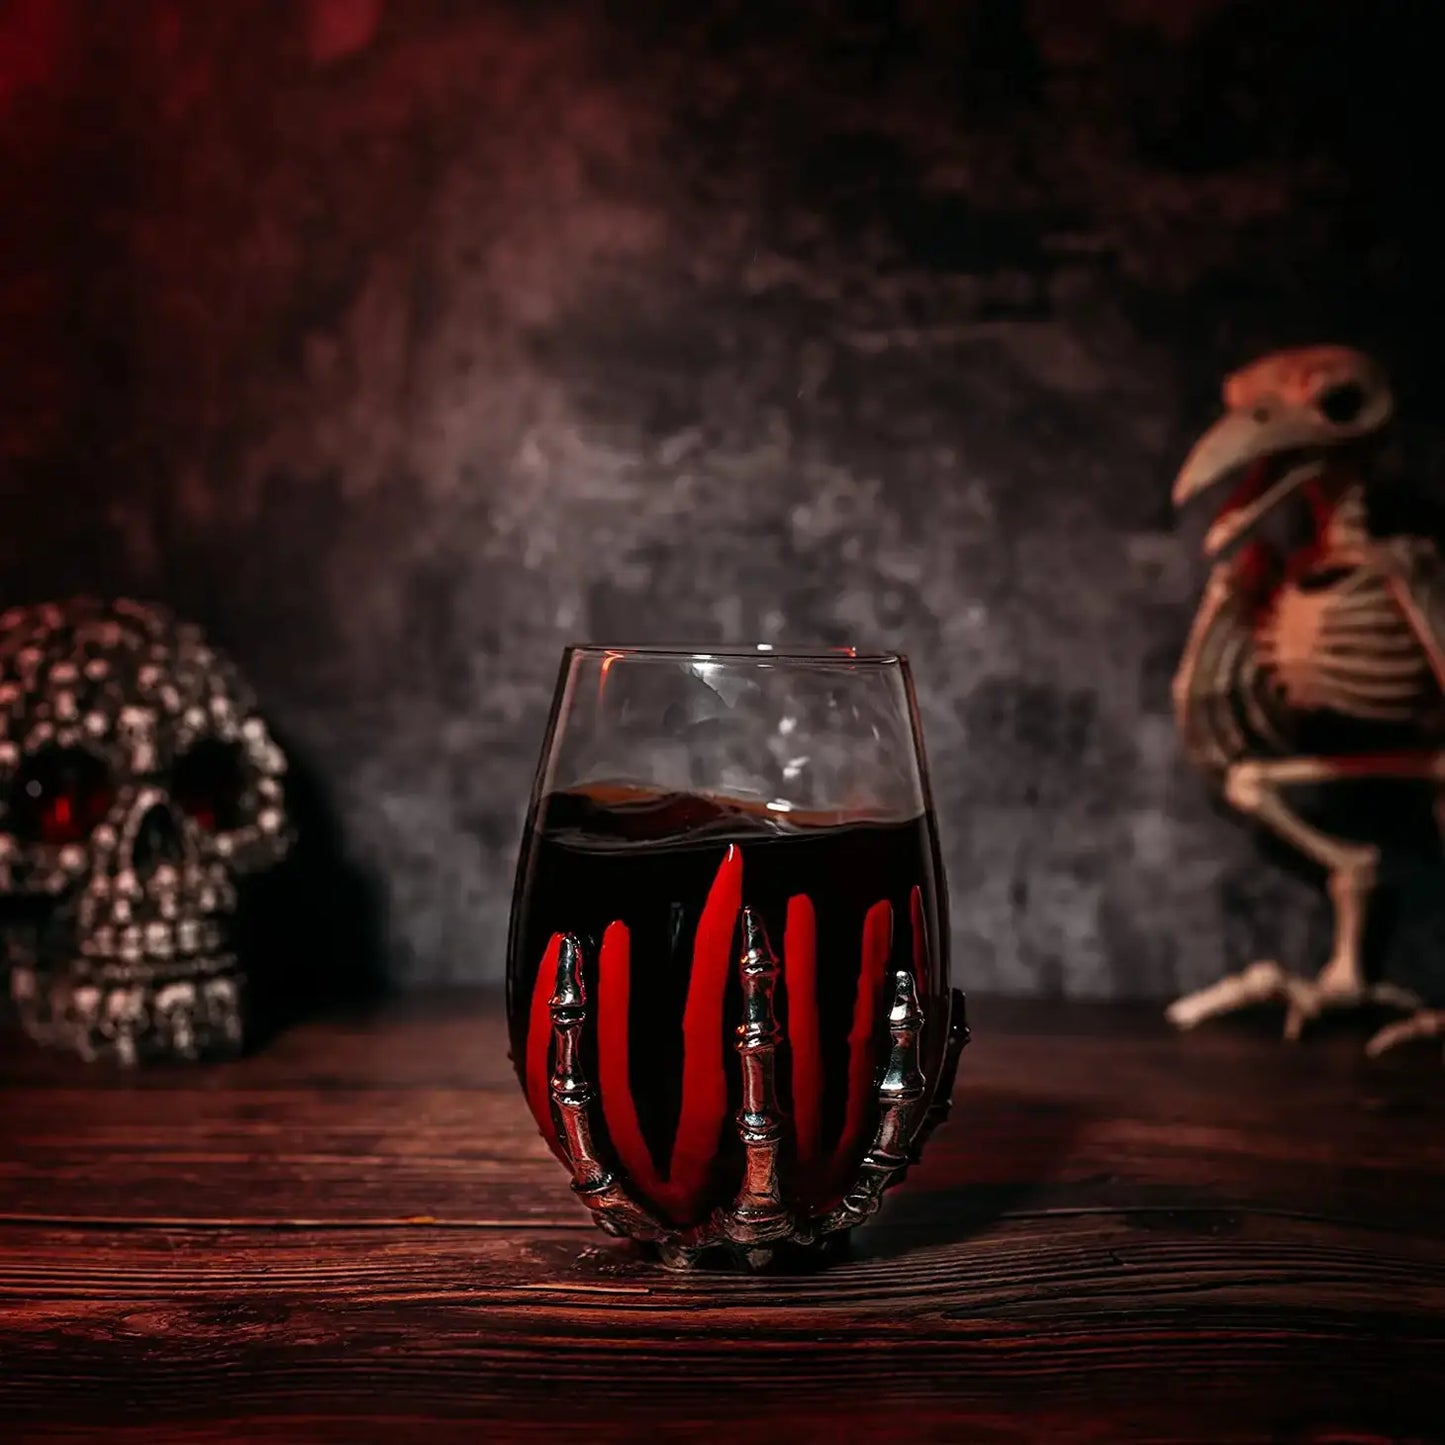 Bloody Skeleton Hand Wine Glass